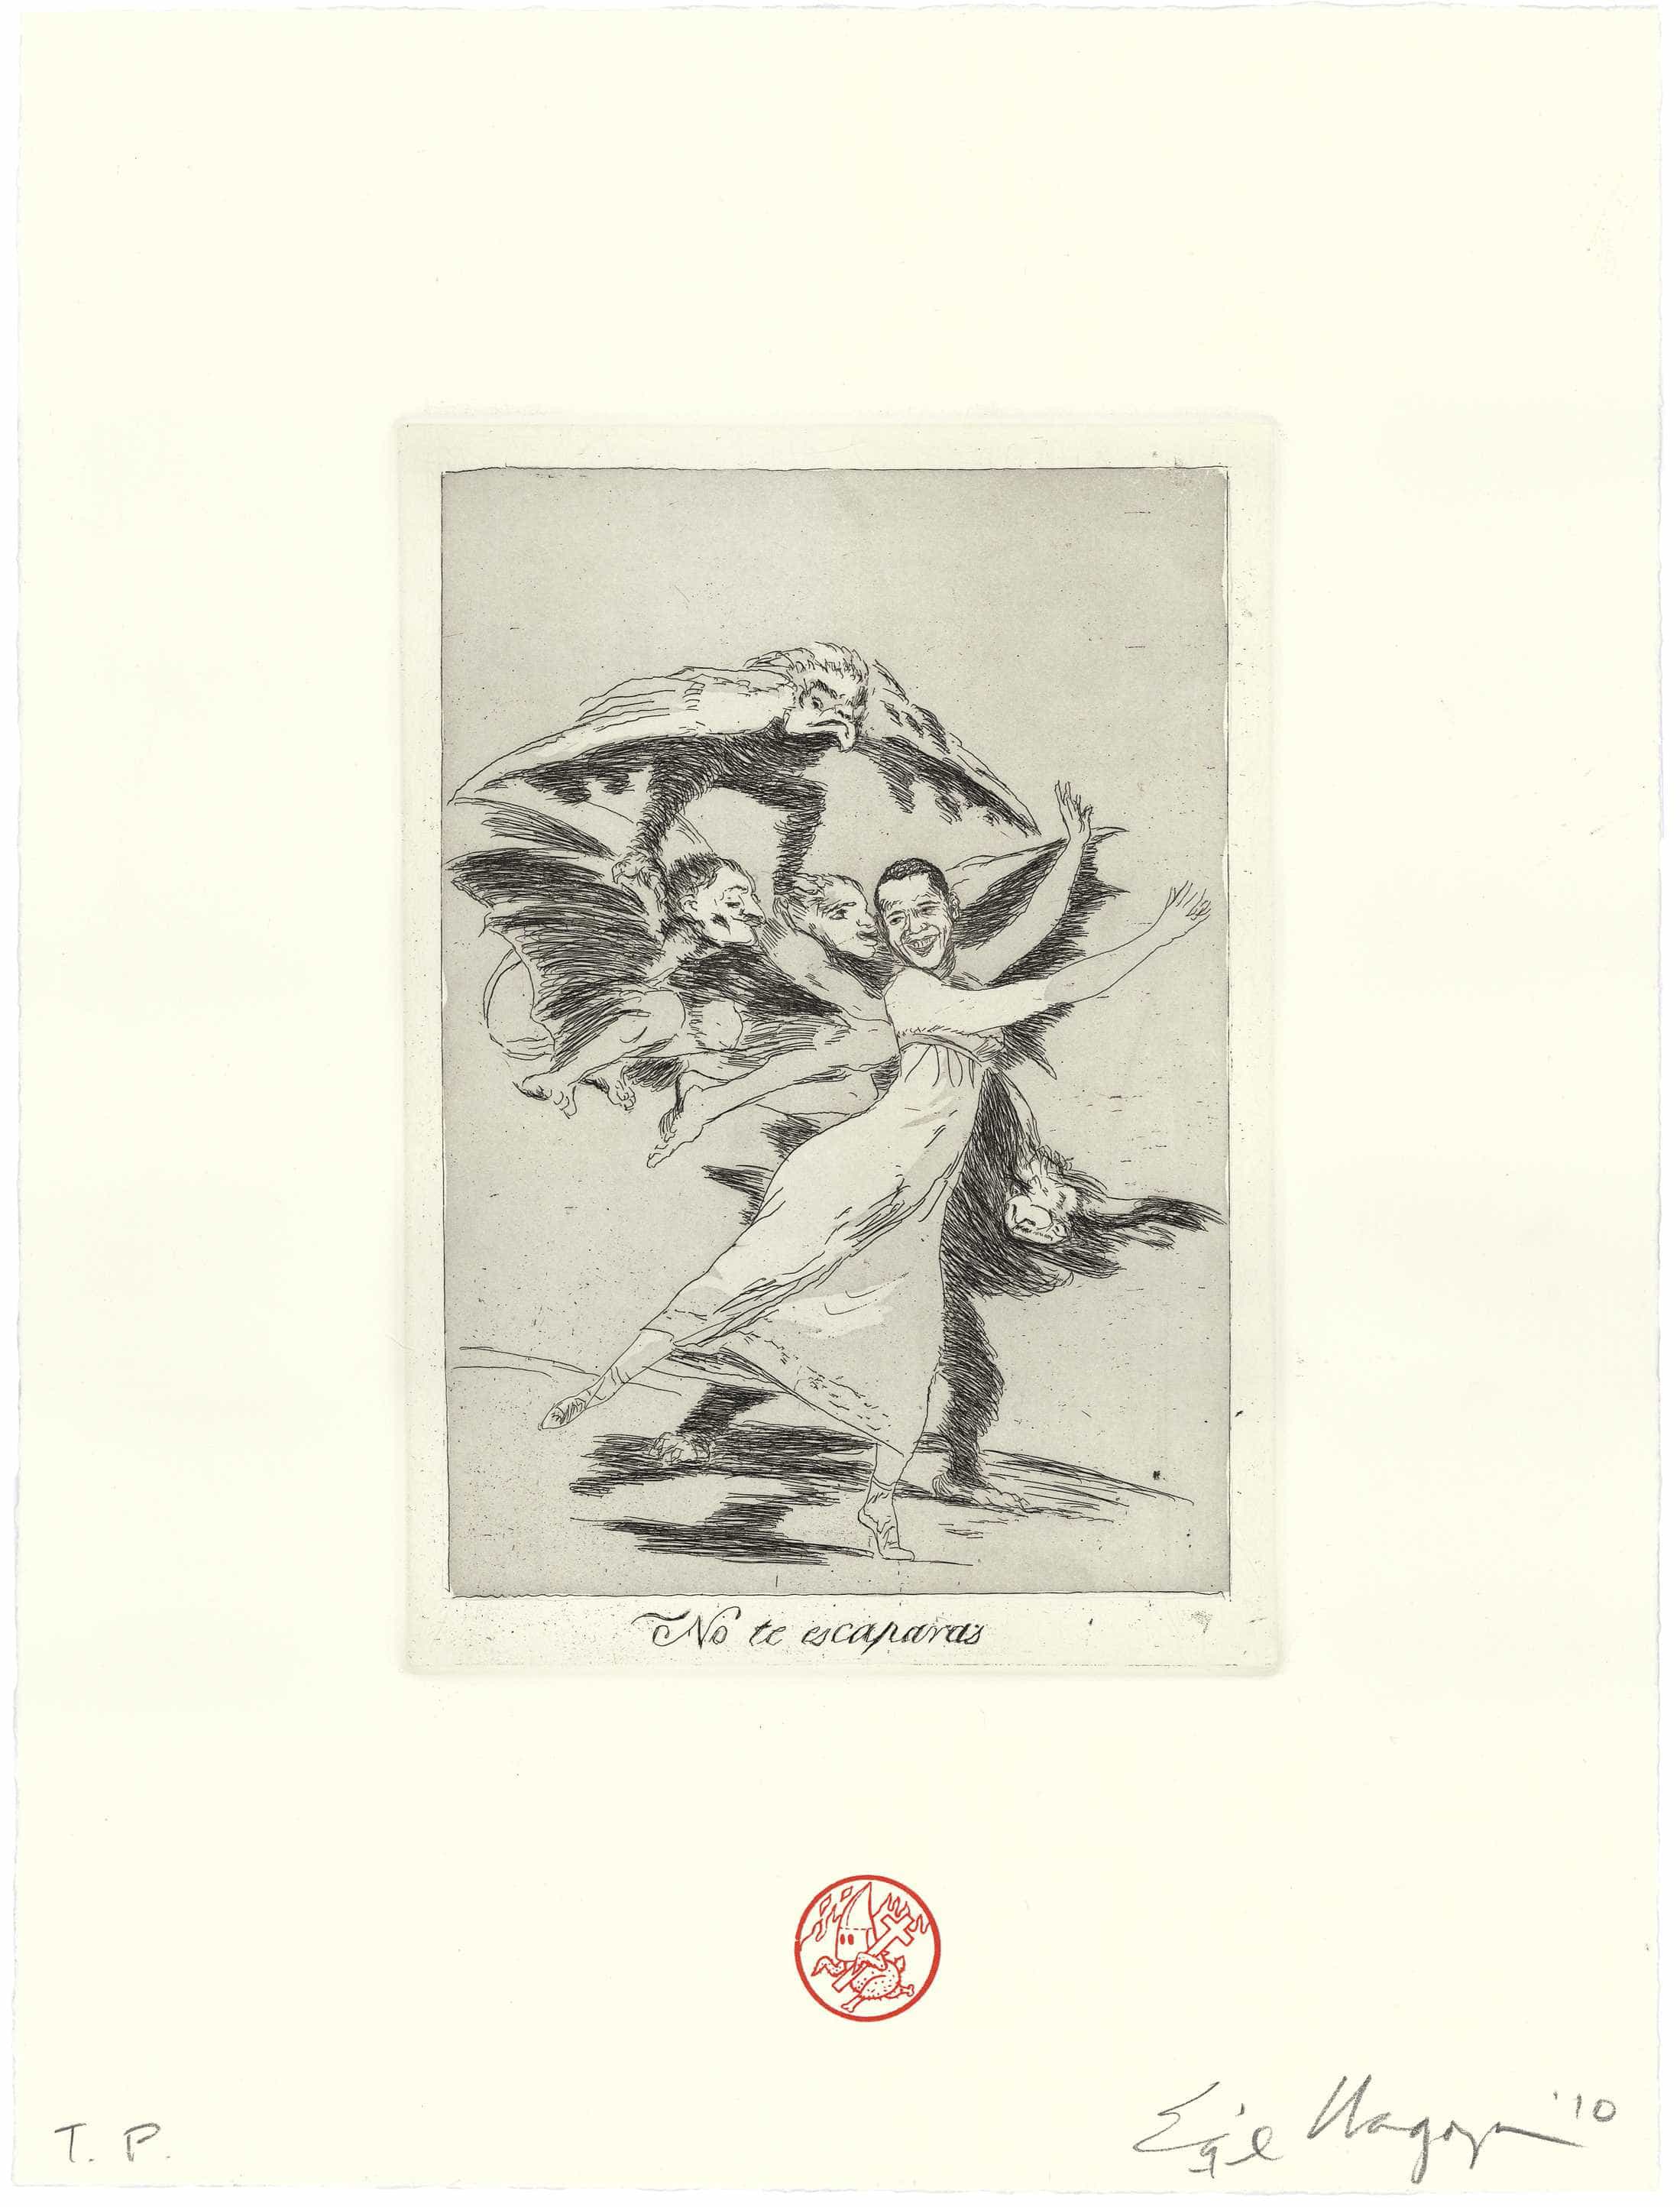 Enrique Chagoya, Return to Goya No. 9, 2010